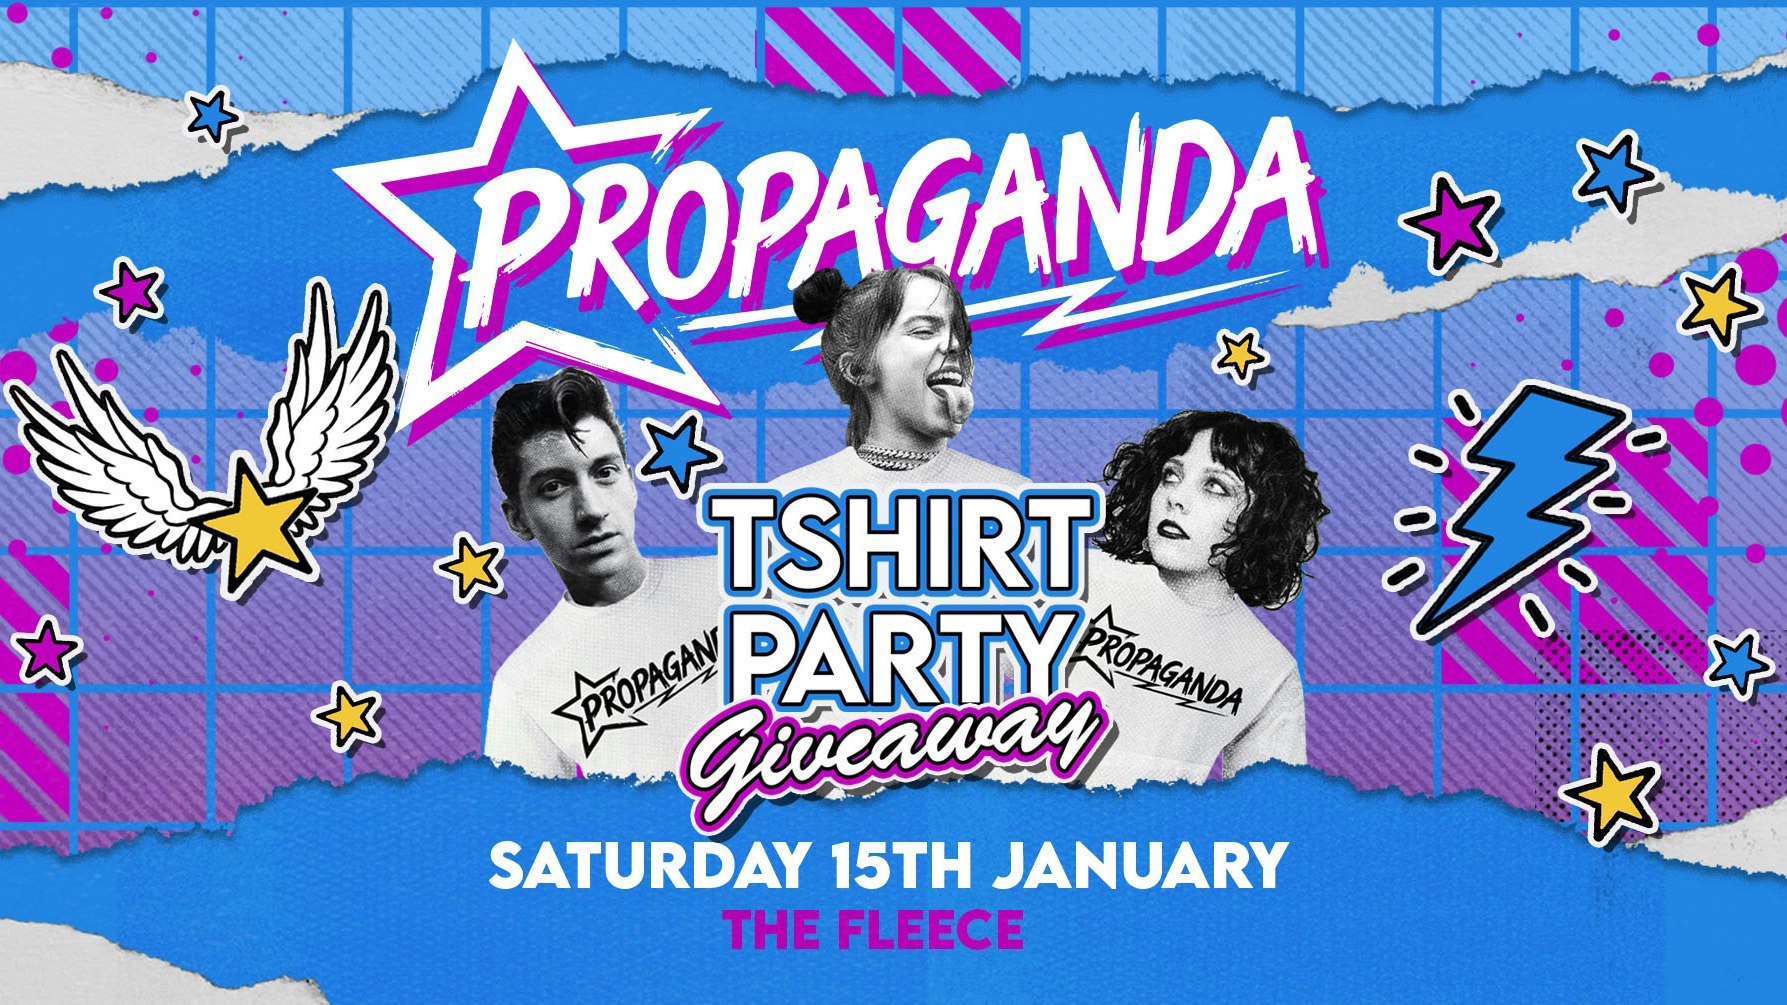 Propaganda Bristol – T-shirt Giveaway Party!